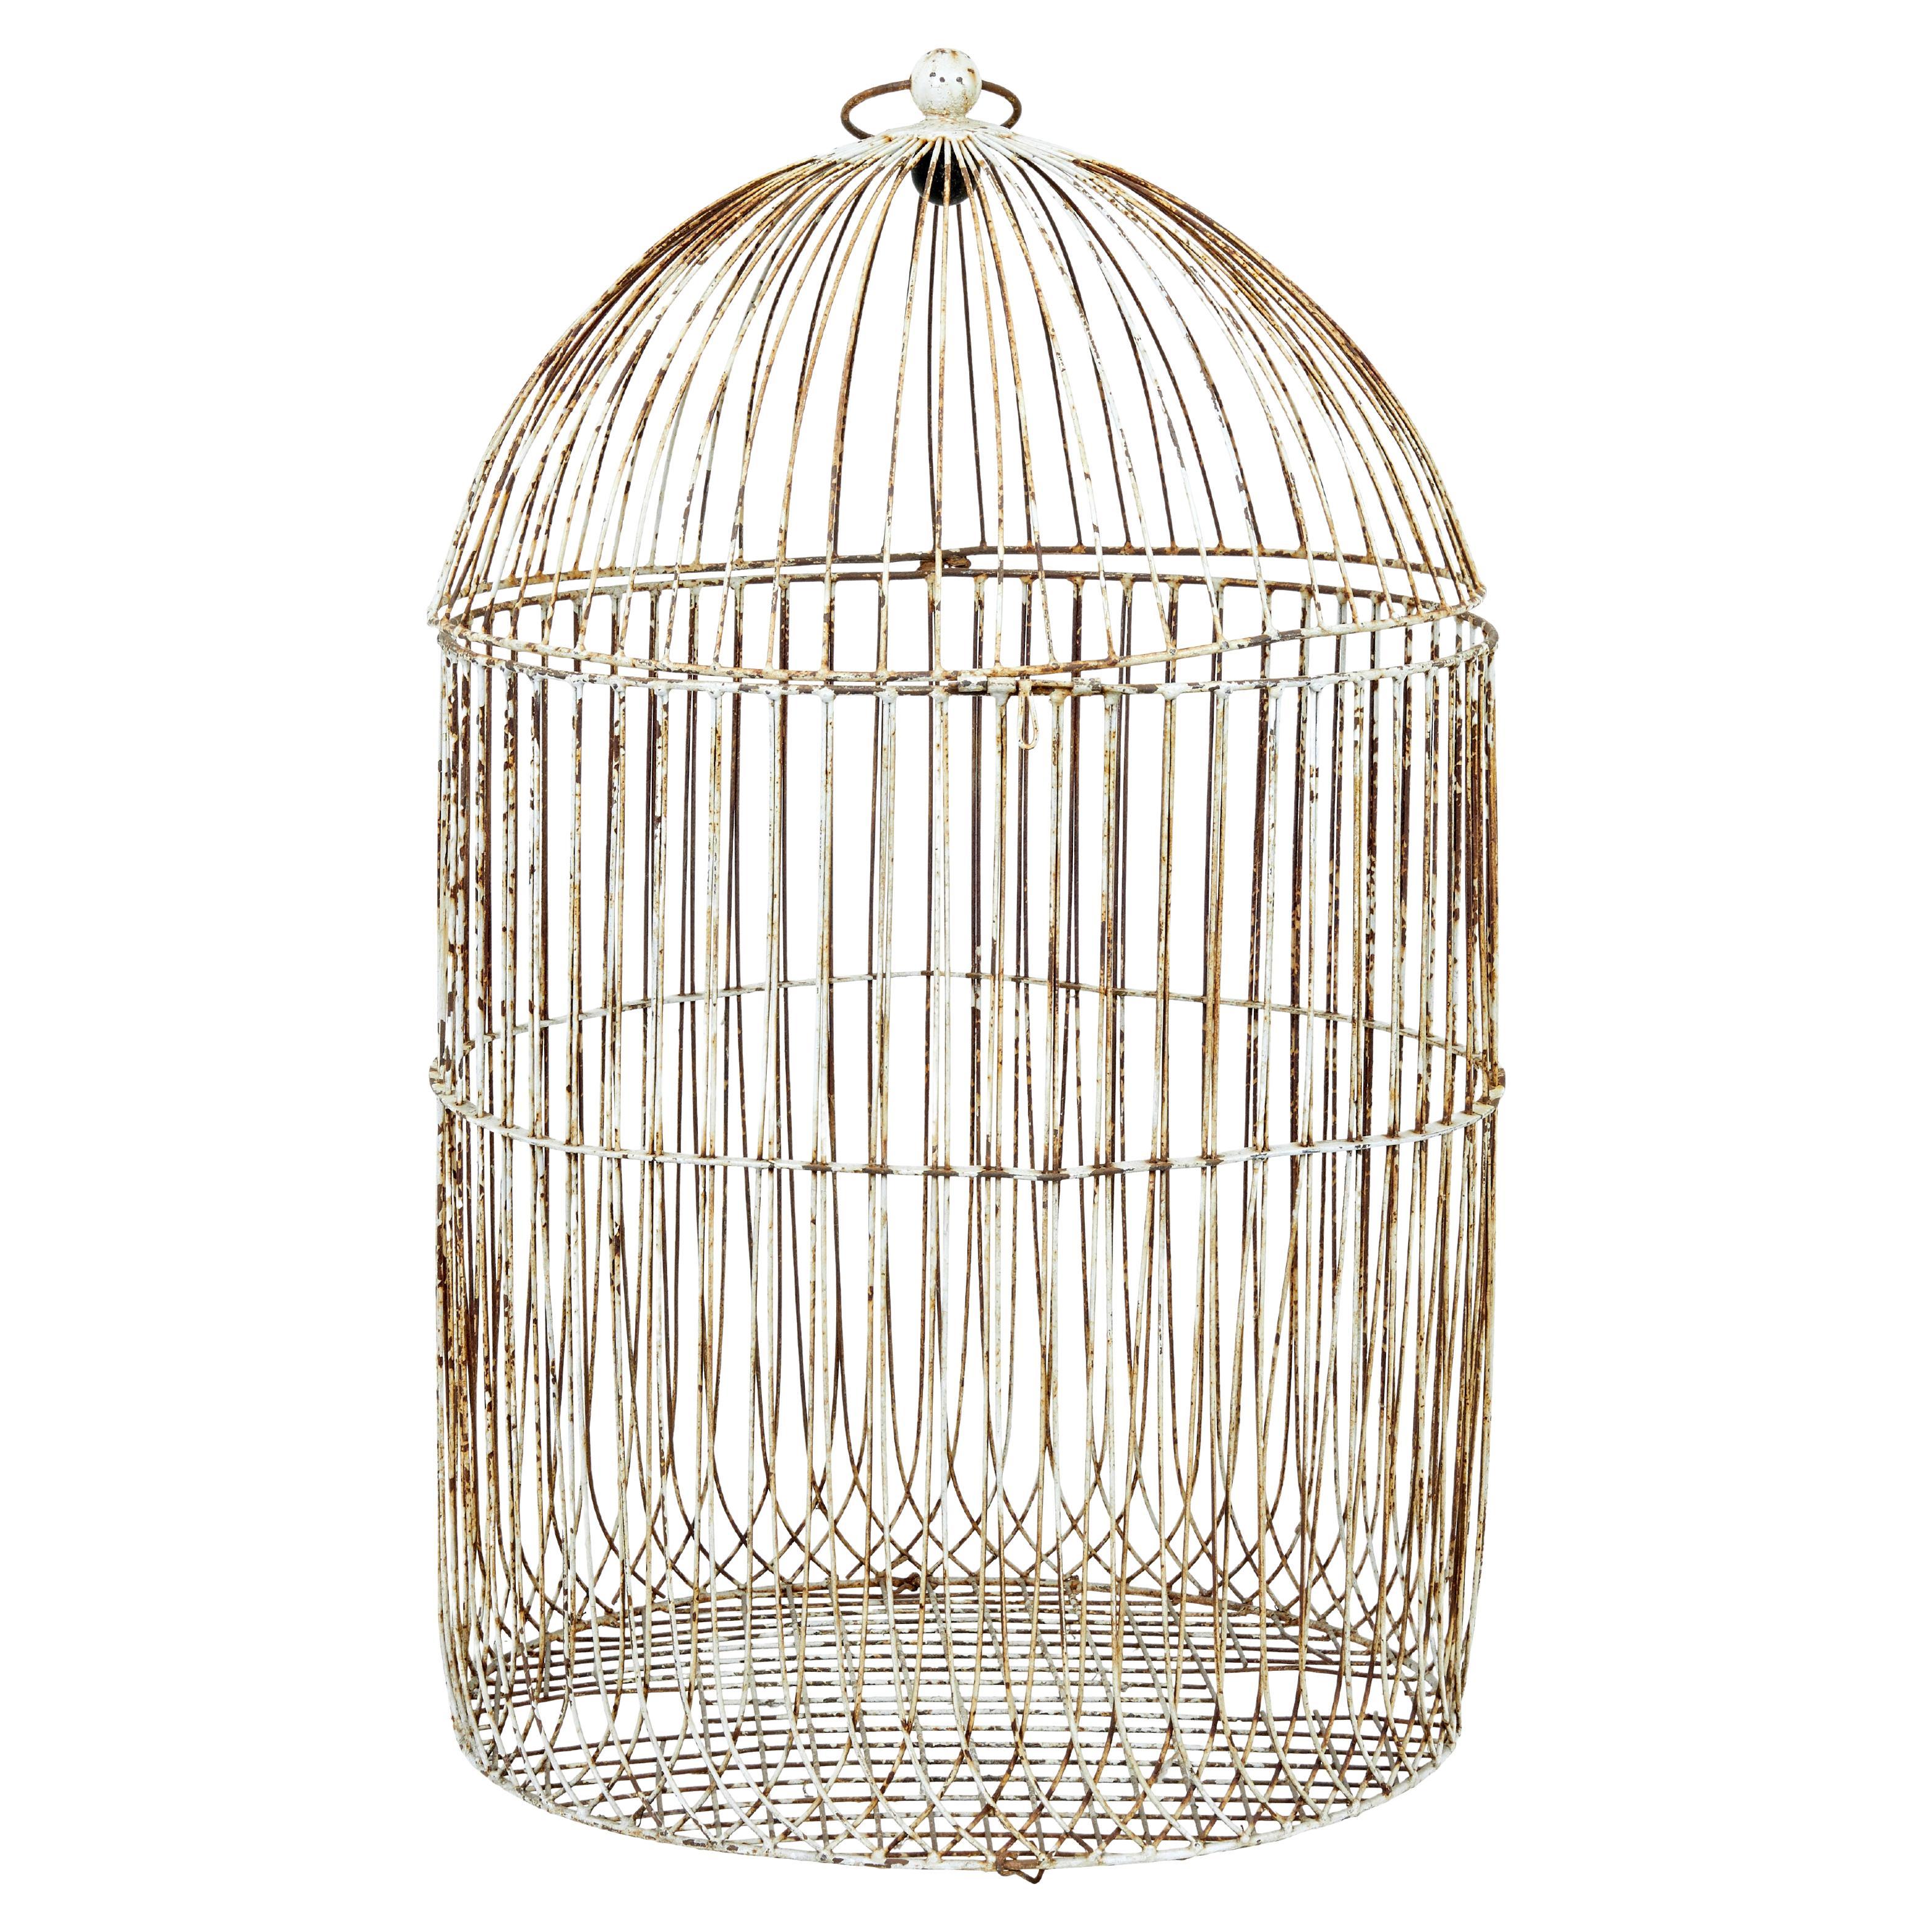 19th Century large wire frame decorative bird cage